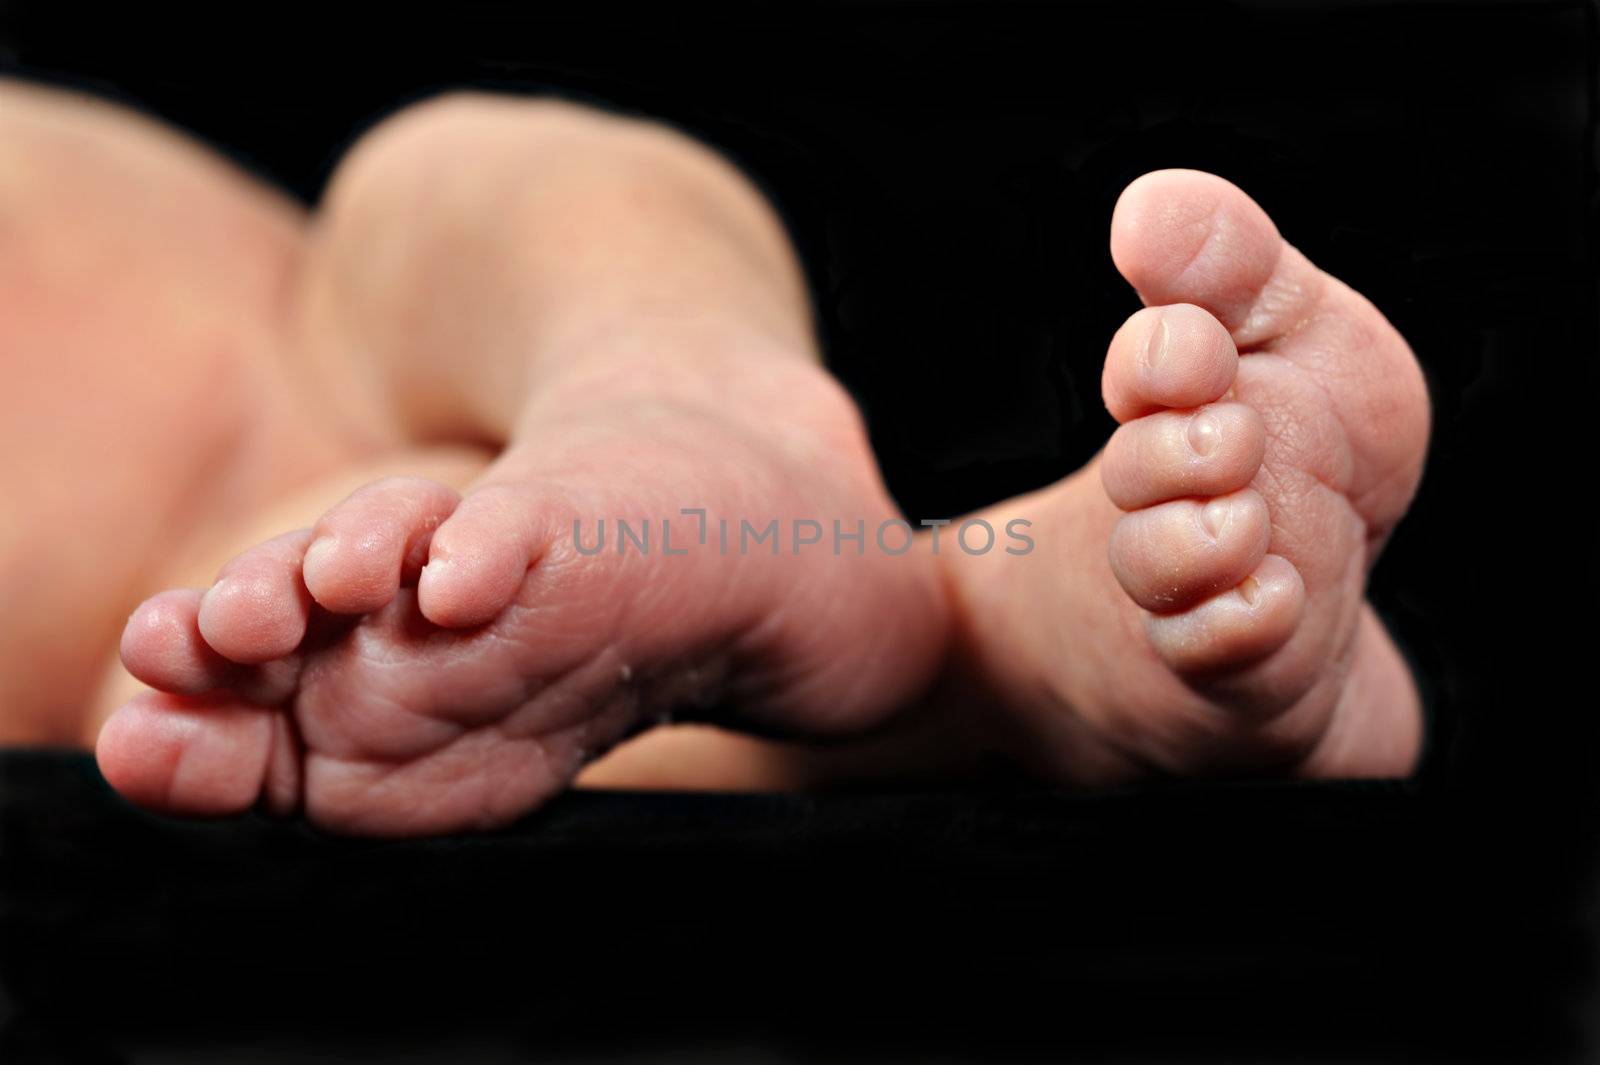 Little feet of a newborn baby by tish1